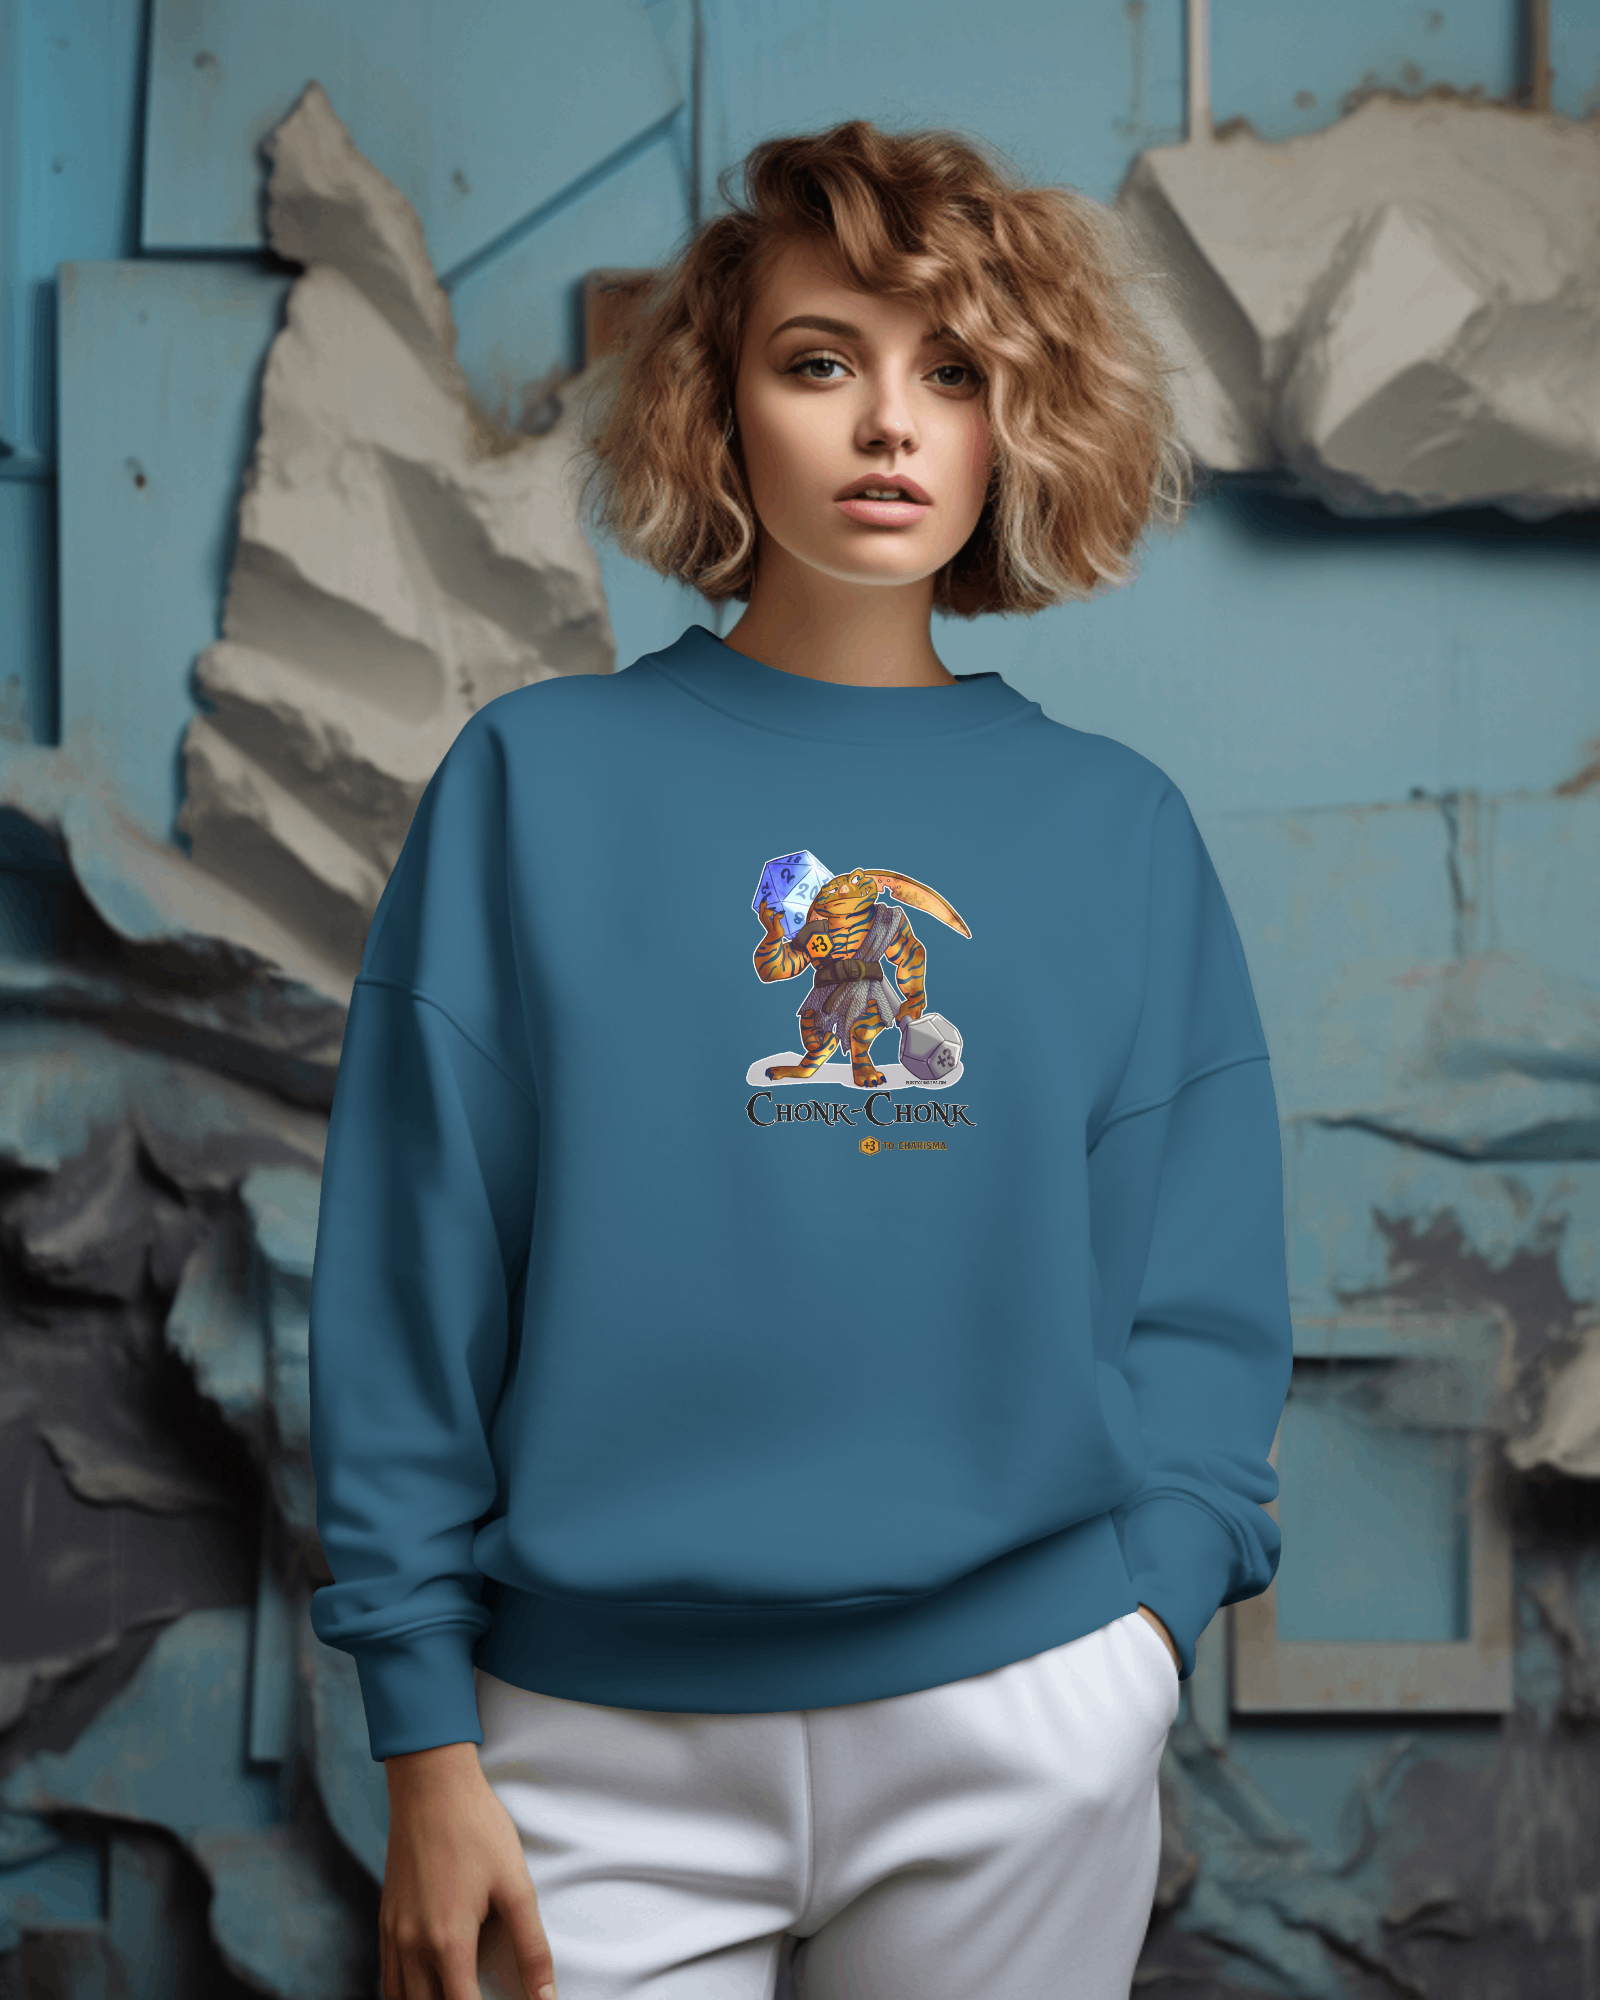 women-sweatshirt-mockup-free-0043.png